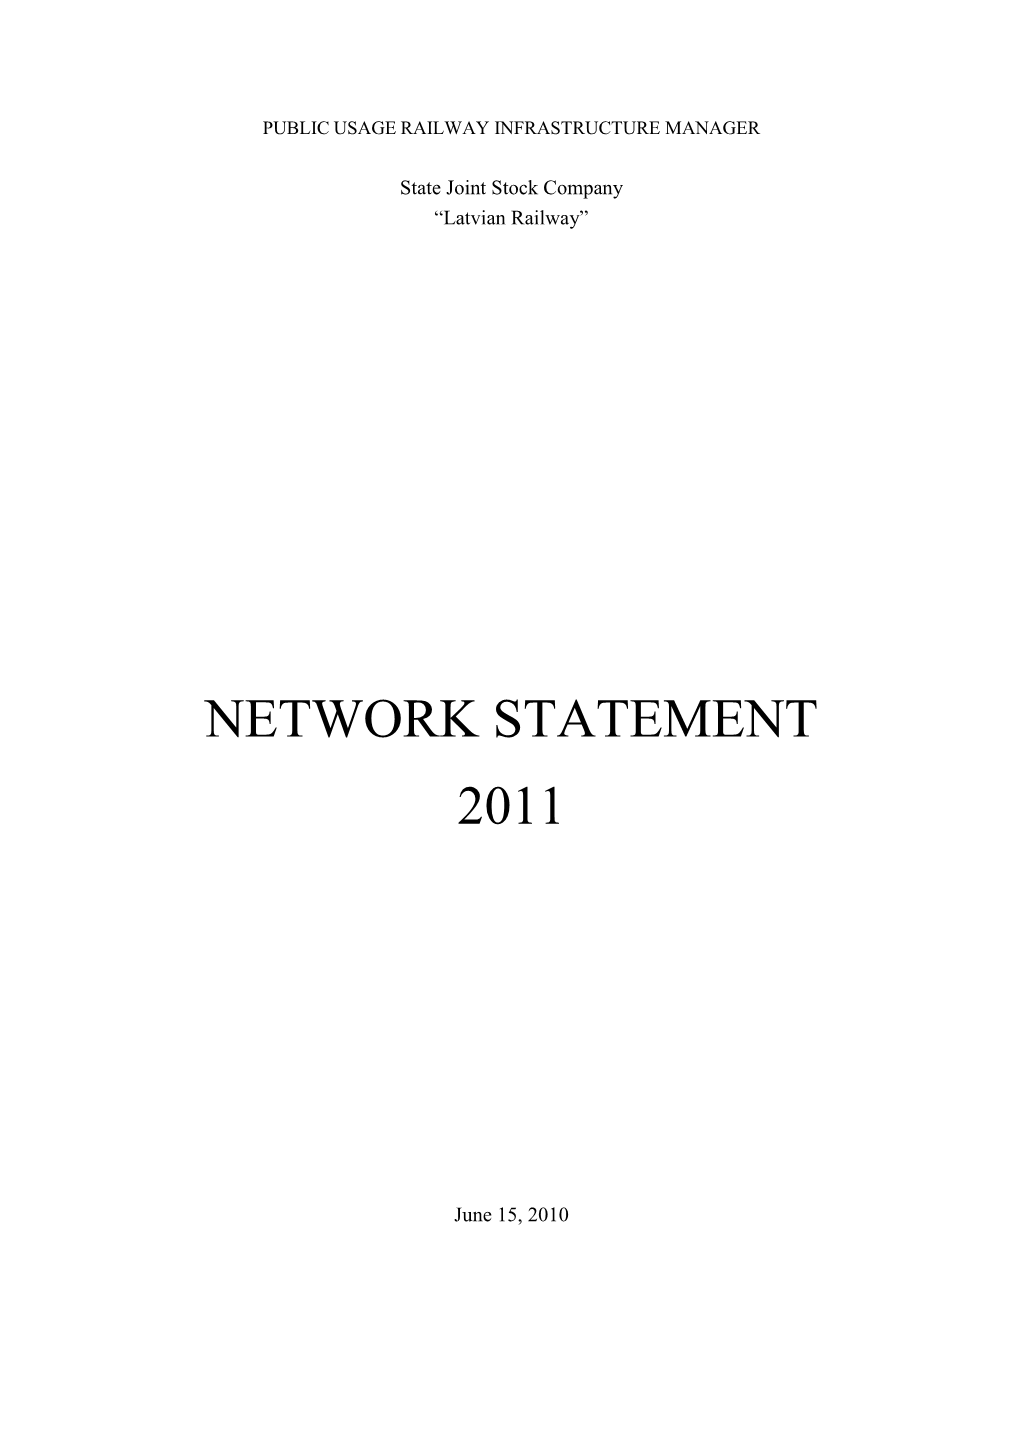 Network Statement 2011 „LATVIAN RAILWAY”